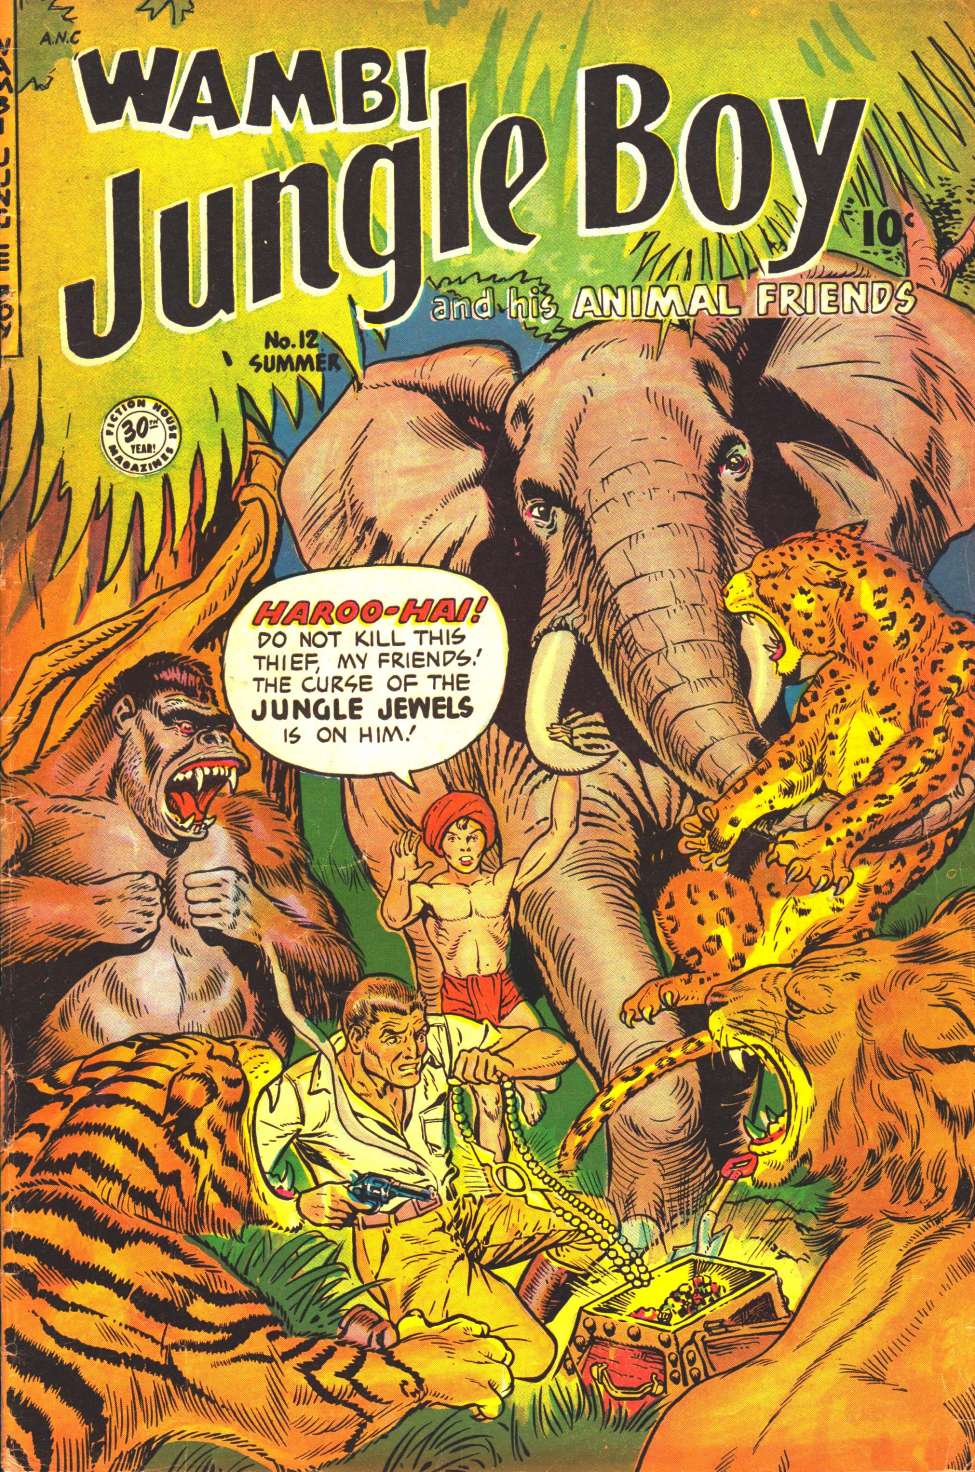 Comic Book Cover For Wambi, Jungle Boy 12 (alt) - Version 2